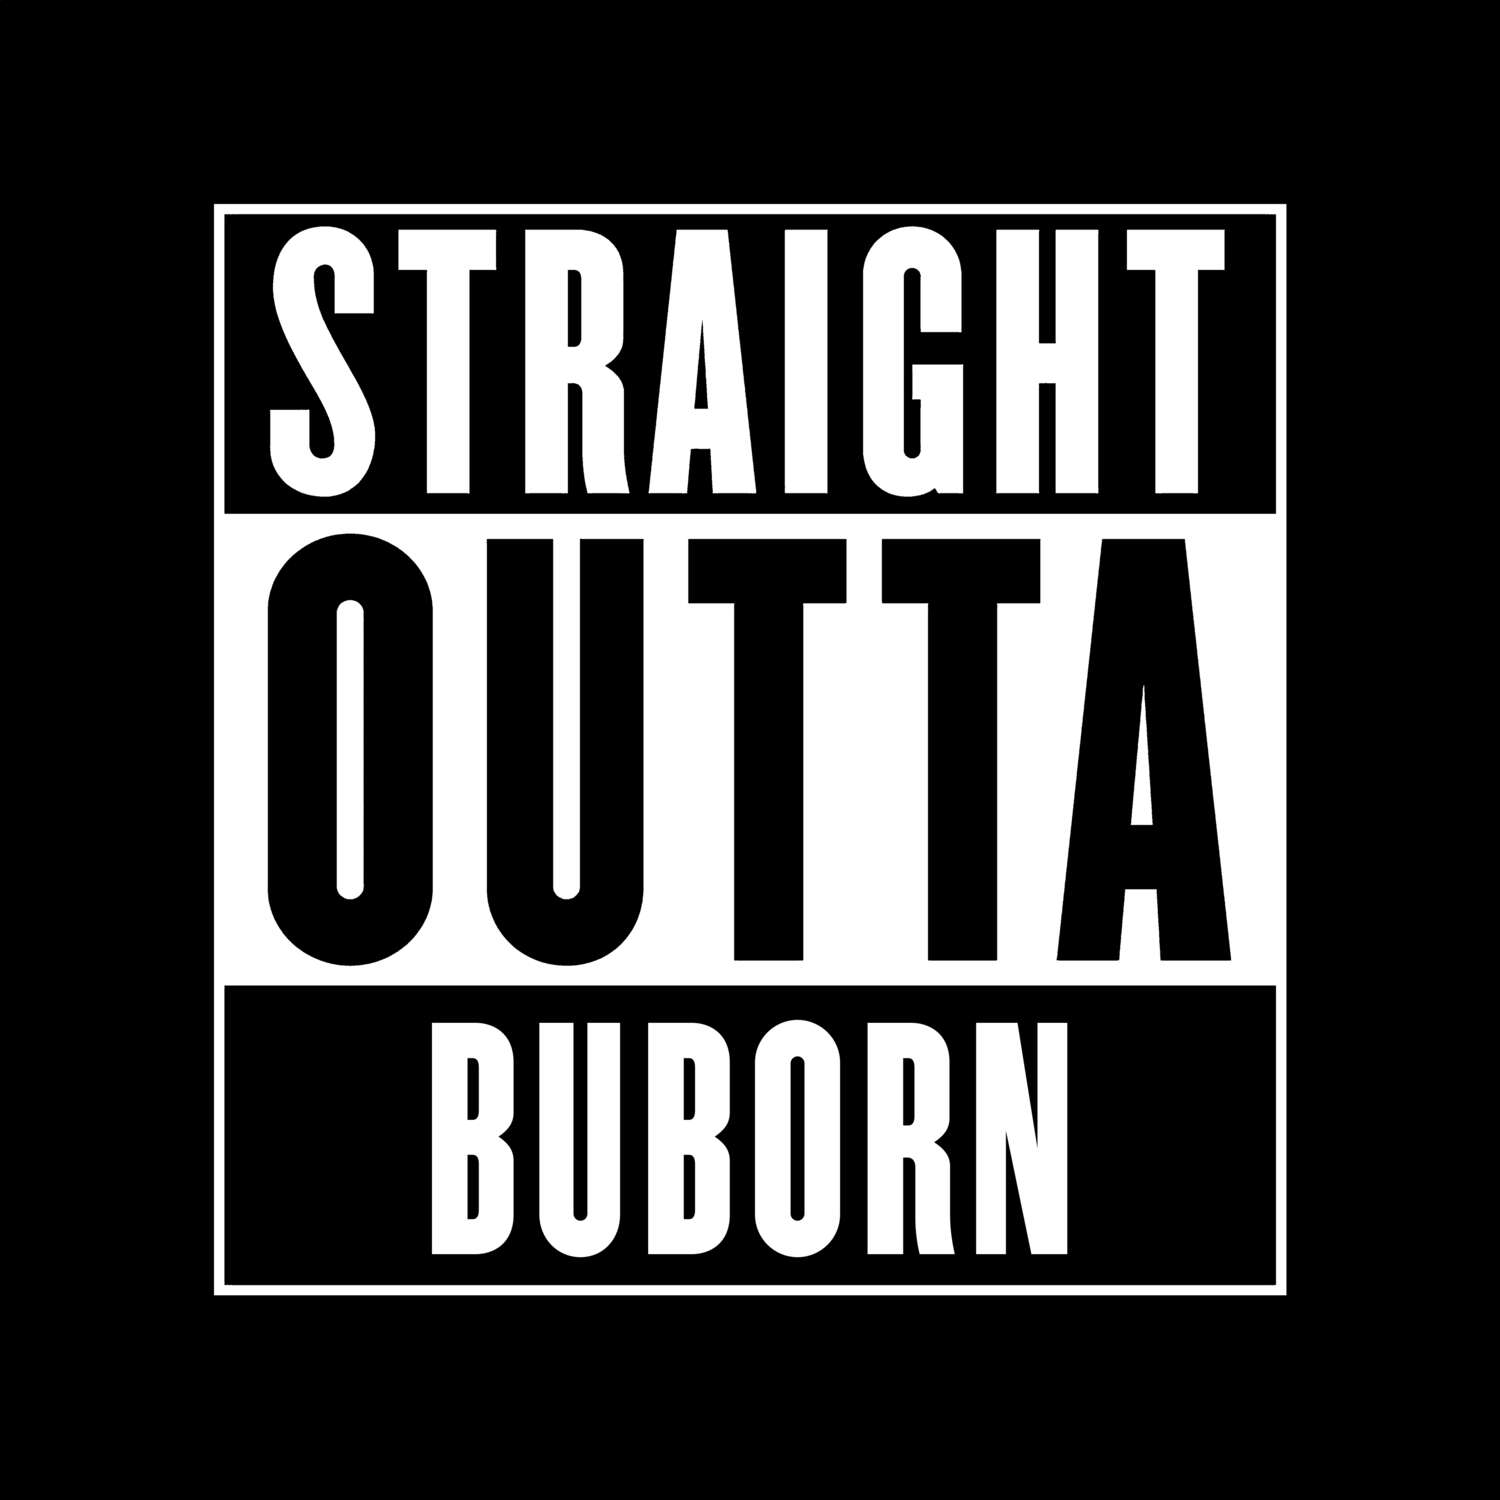 Buborn T-Shirt »Straight Outta«